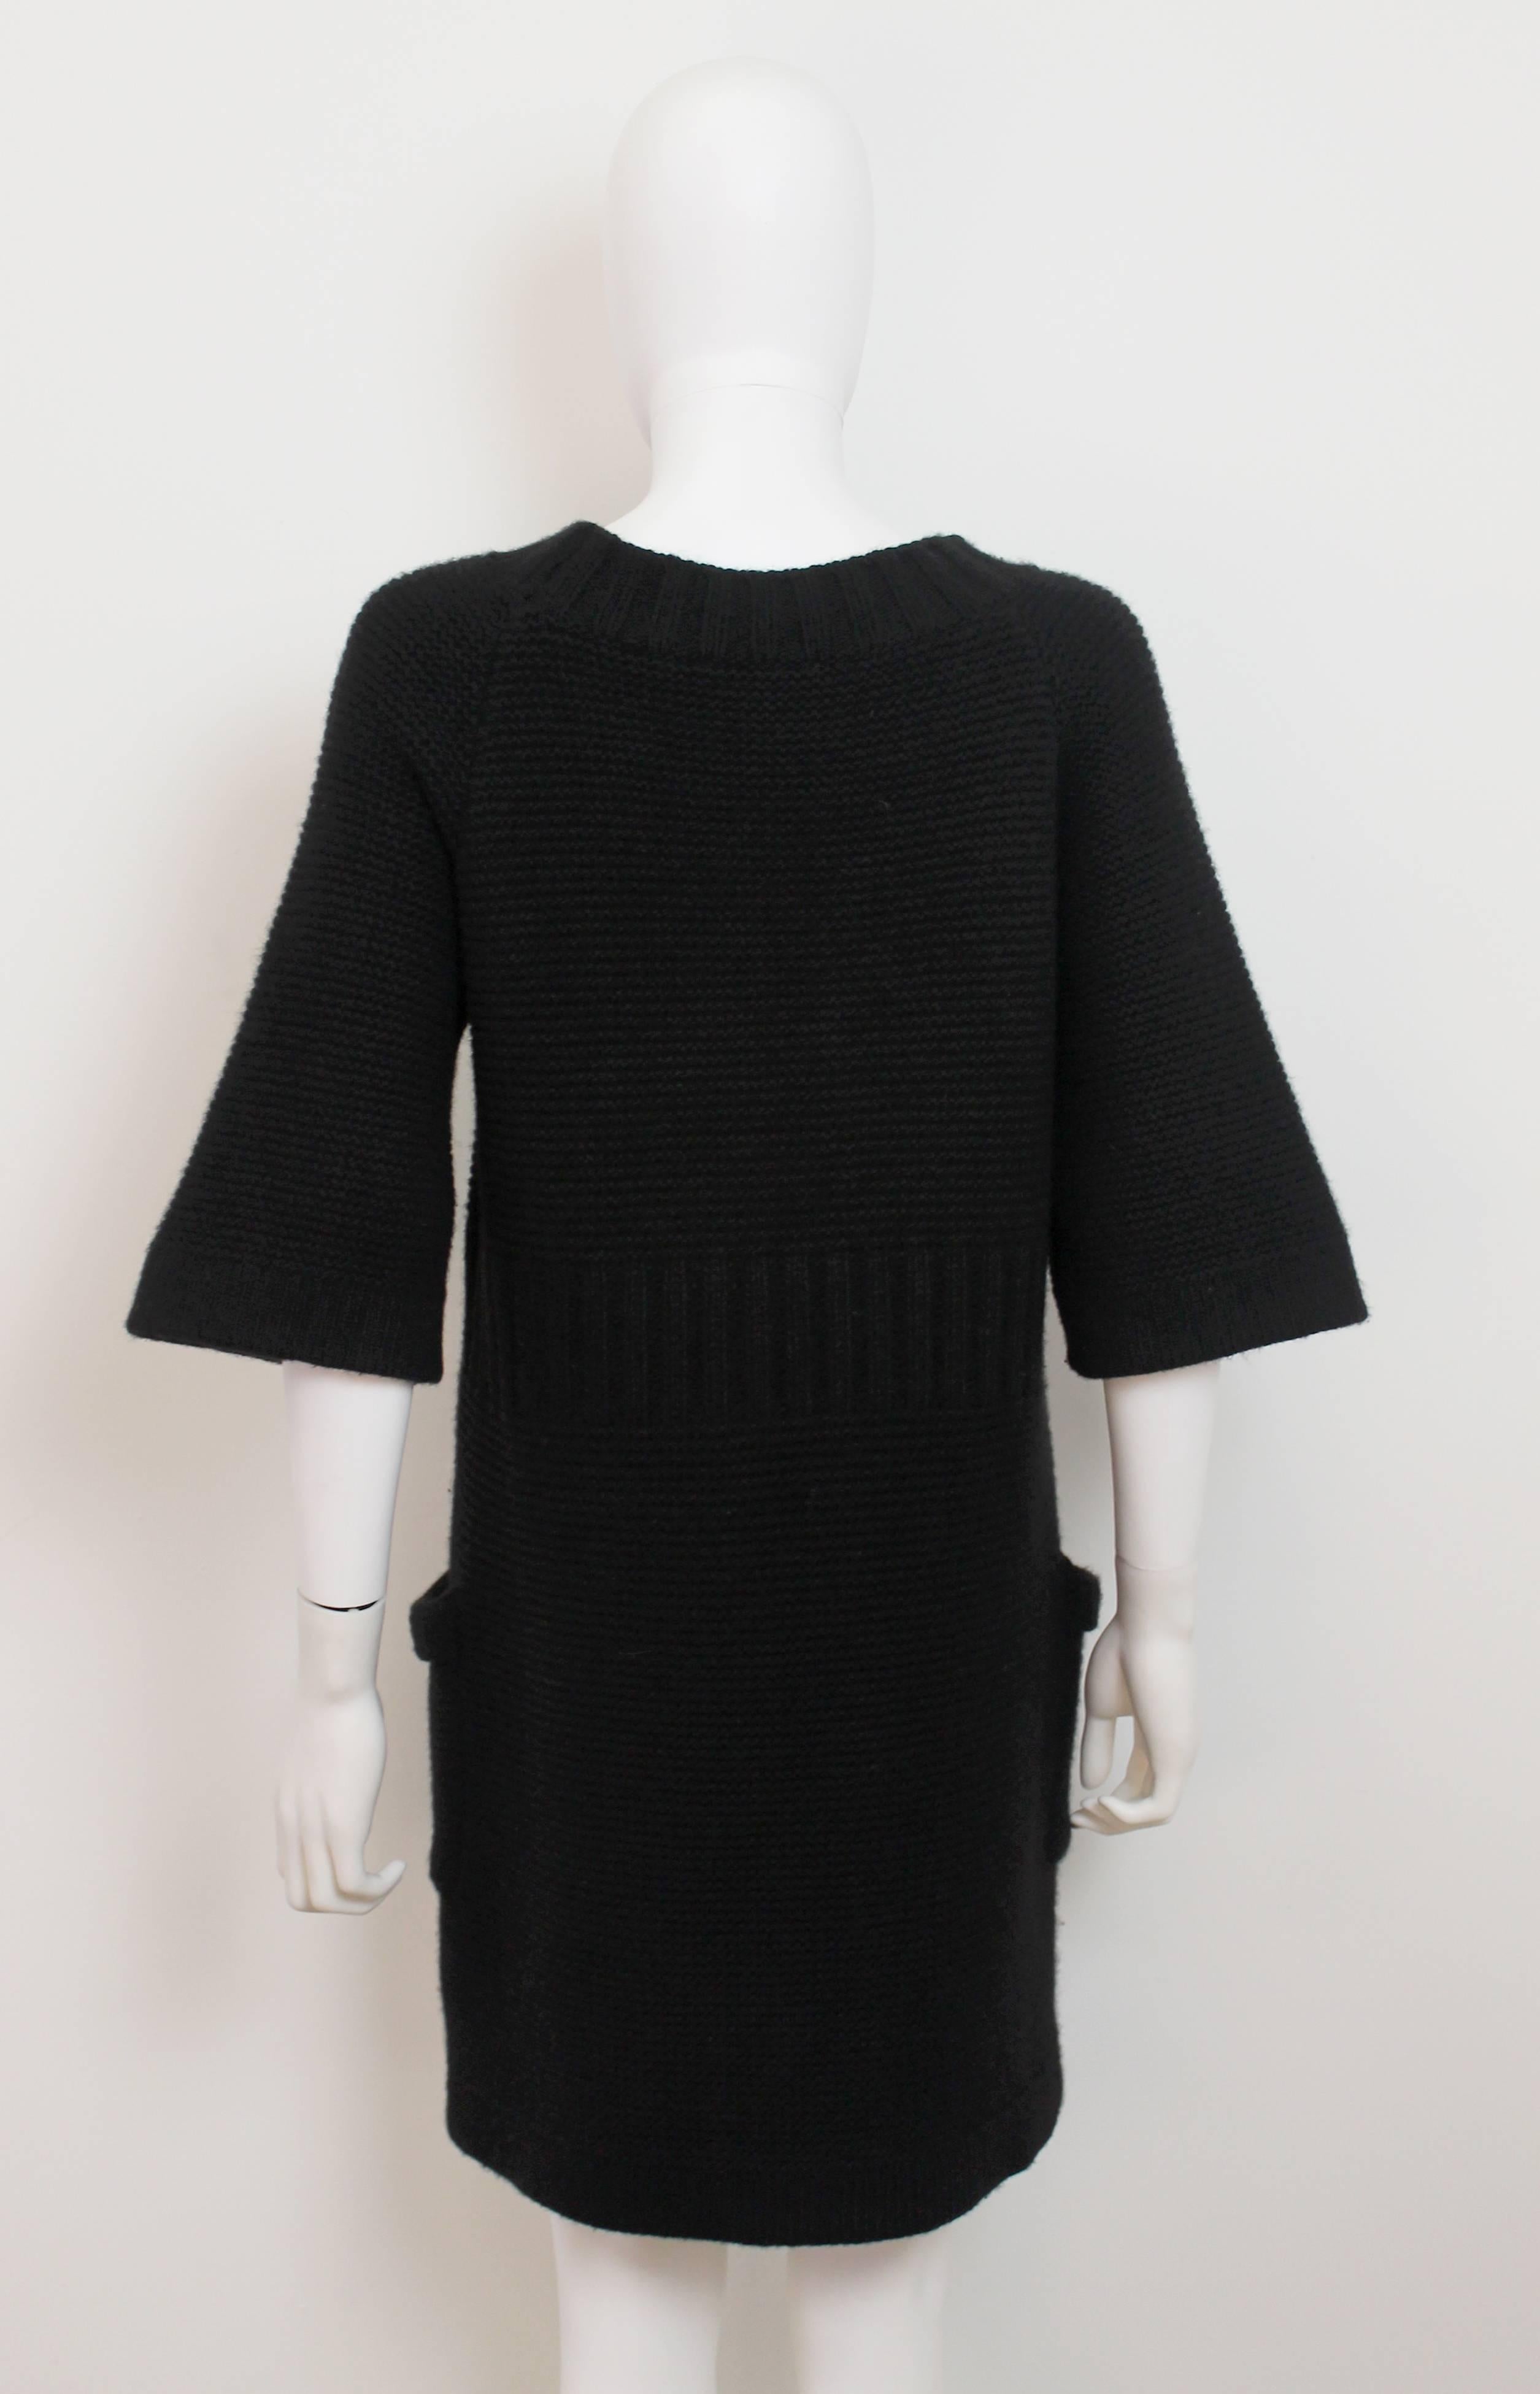 Women's Chanel AW 2006 Black Angora Knit Dress